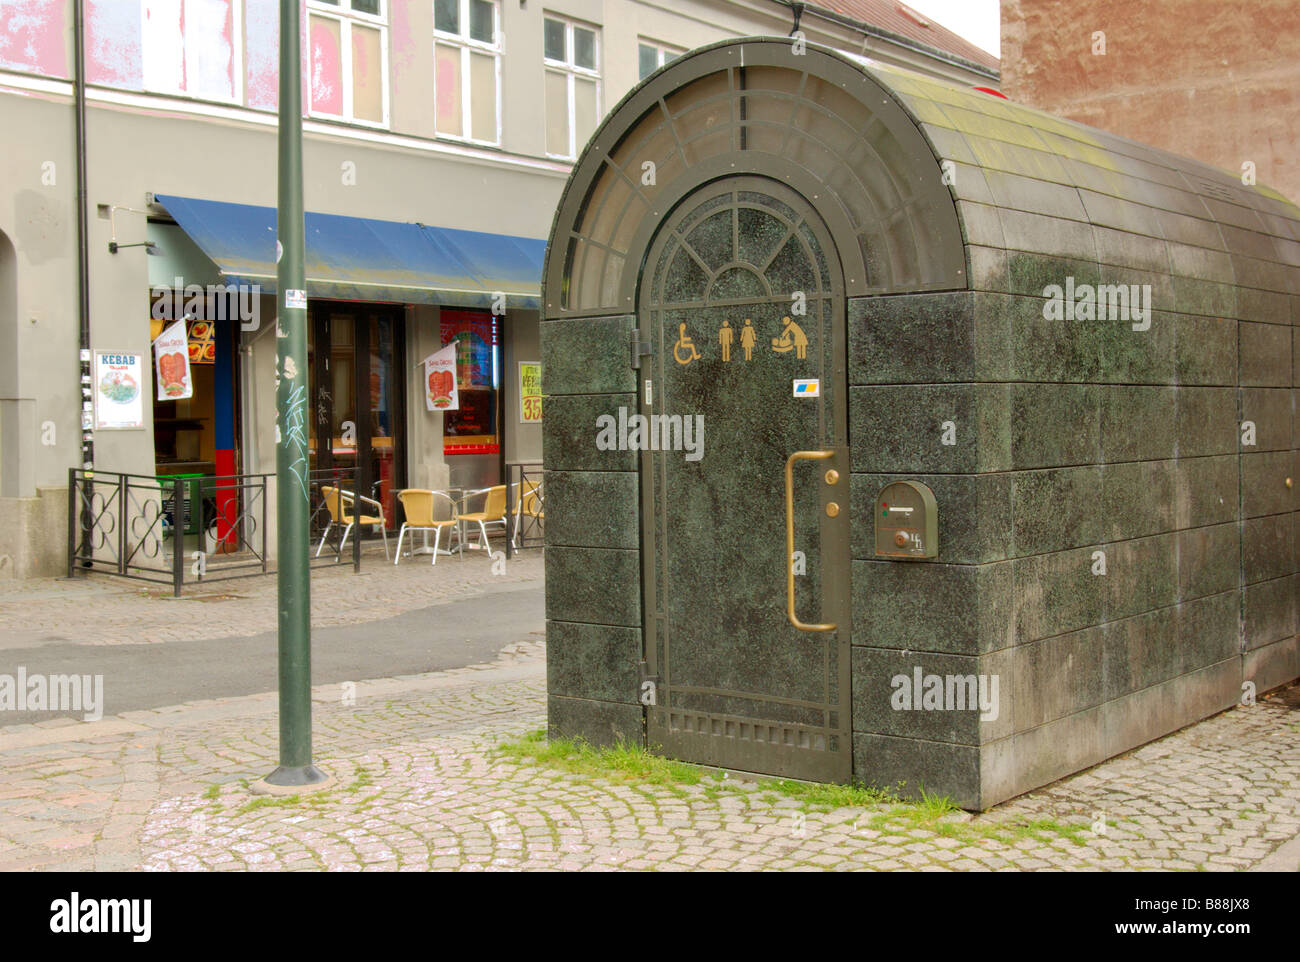 Freestanding public toilet, Lund, Sweden Stock Photo